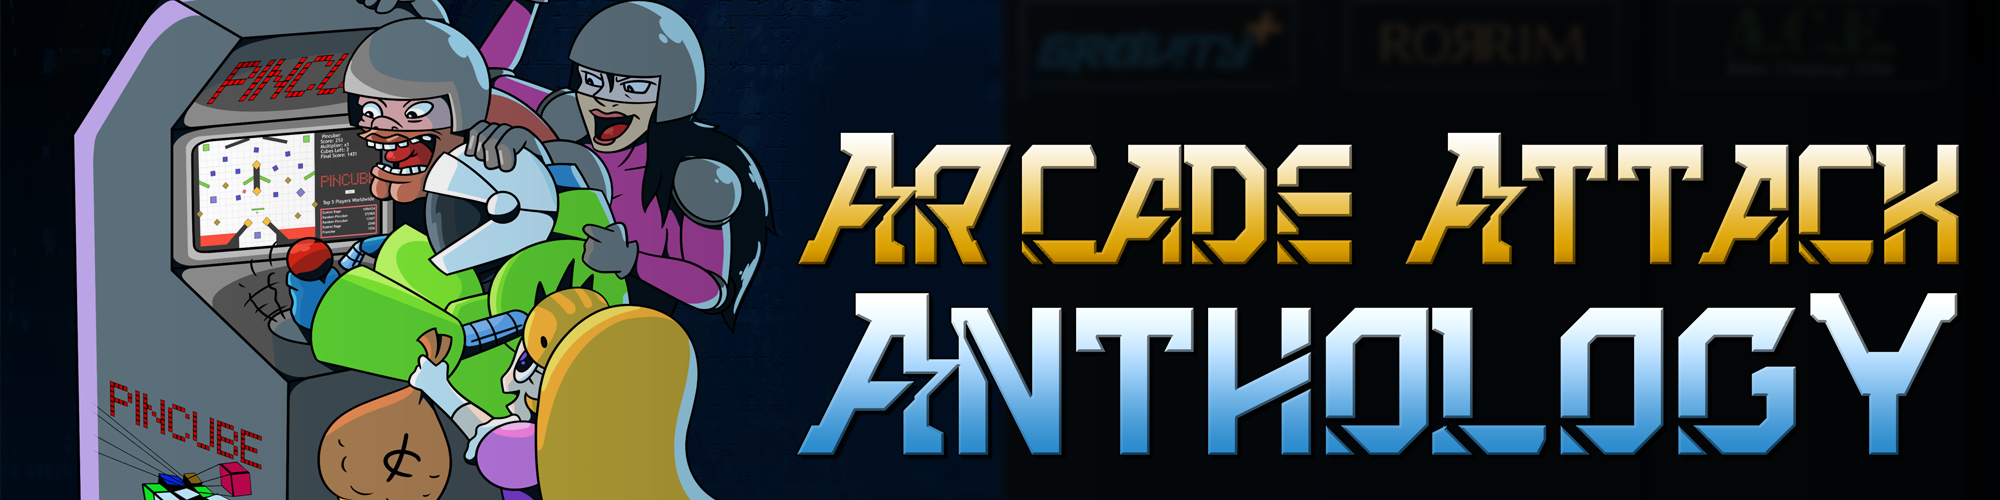 Arcade Attack Anthology